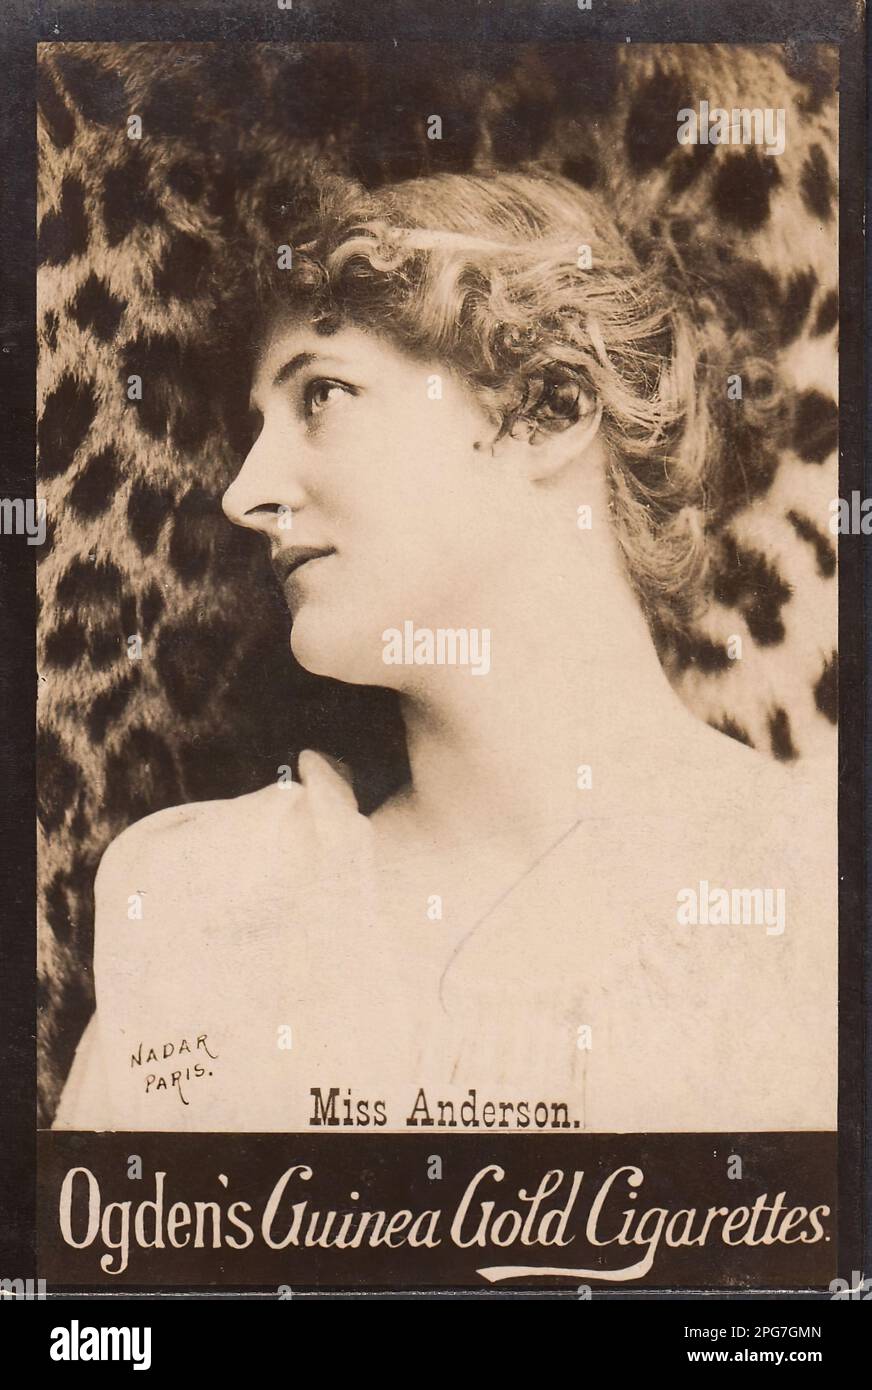 Porträt von Miss Anderson - Vintage Cigarette Card, Victorian Epoche Stockfoto